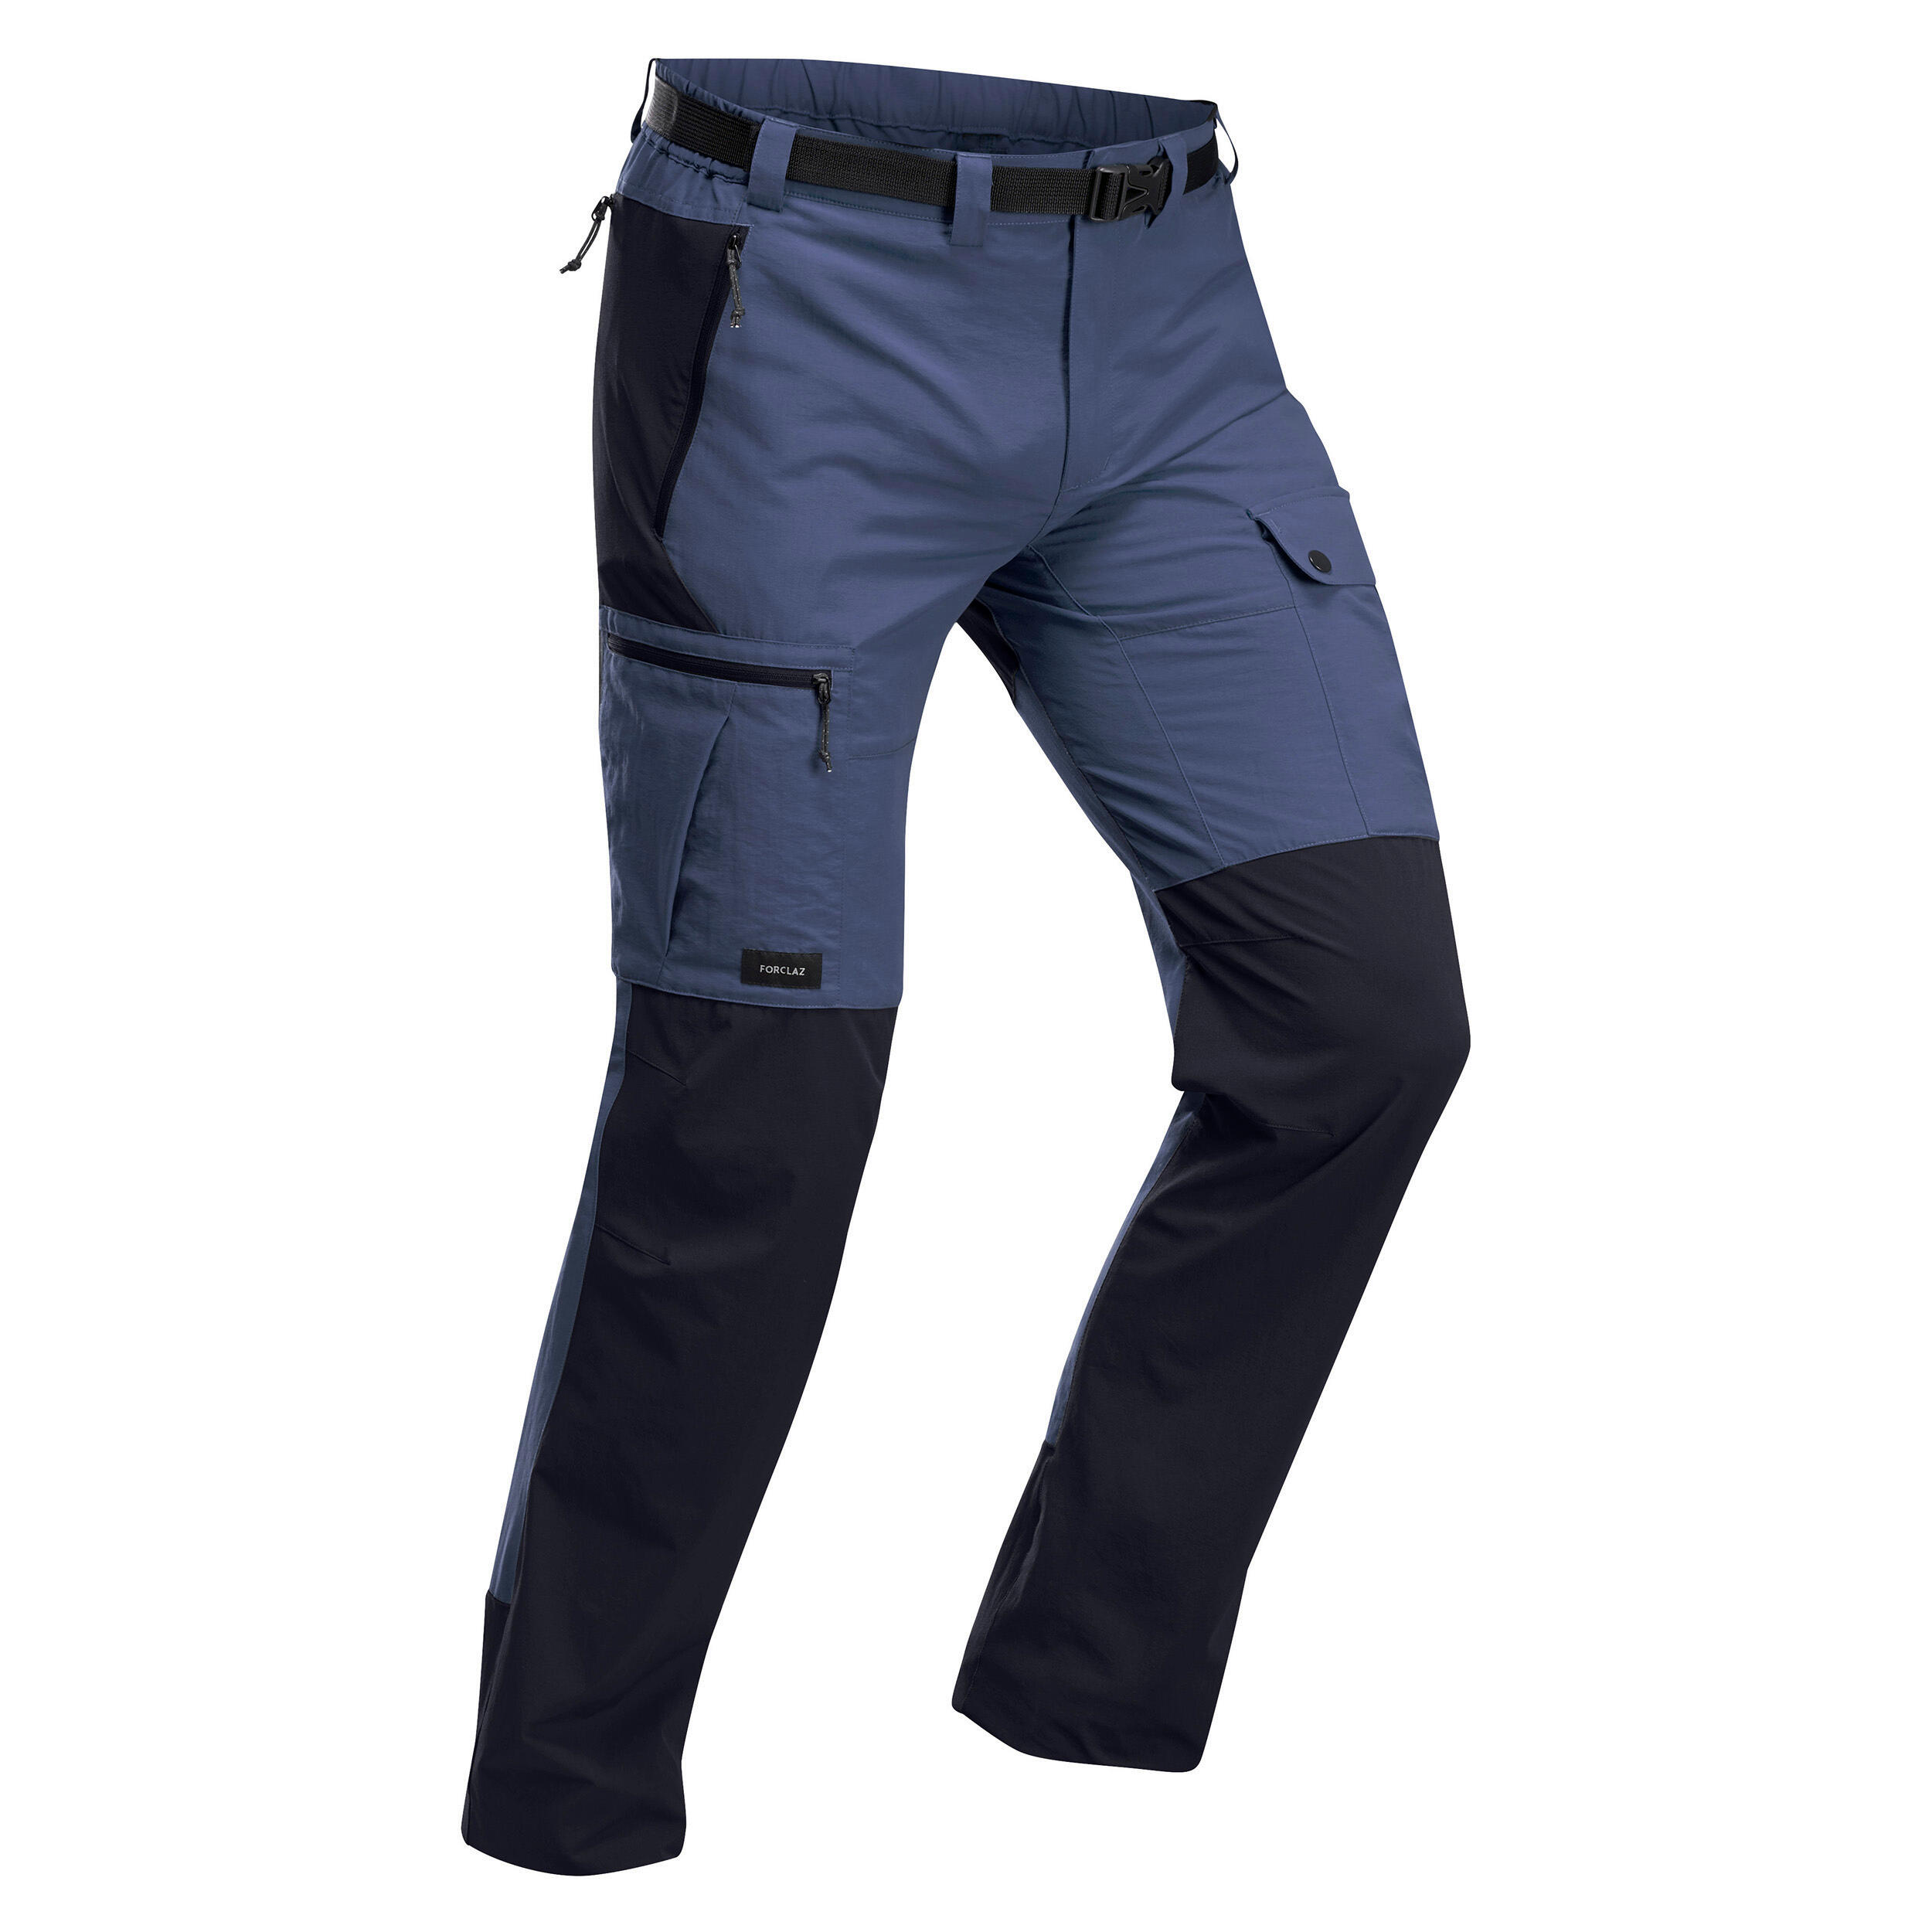 Men's Travel Backpacking Cargo Pants - TRAVEL 100 Grey | Decathlon